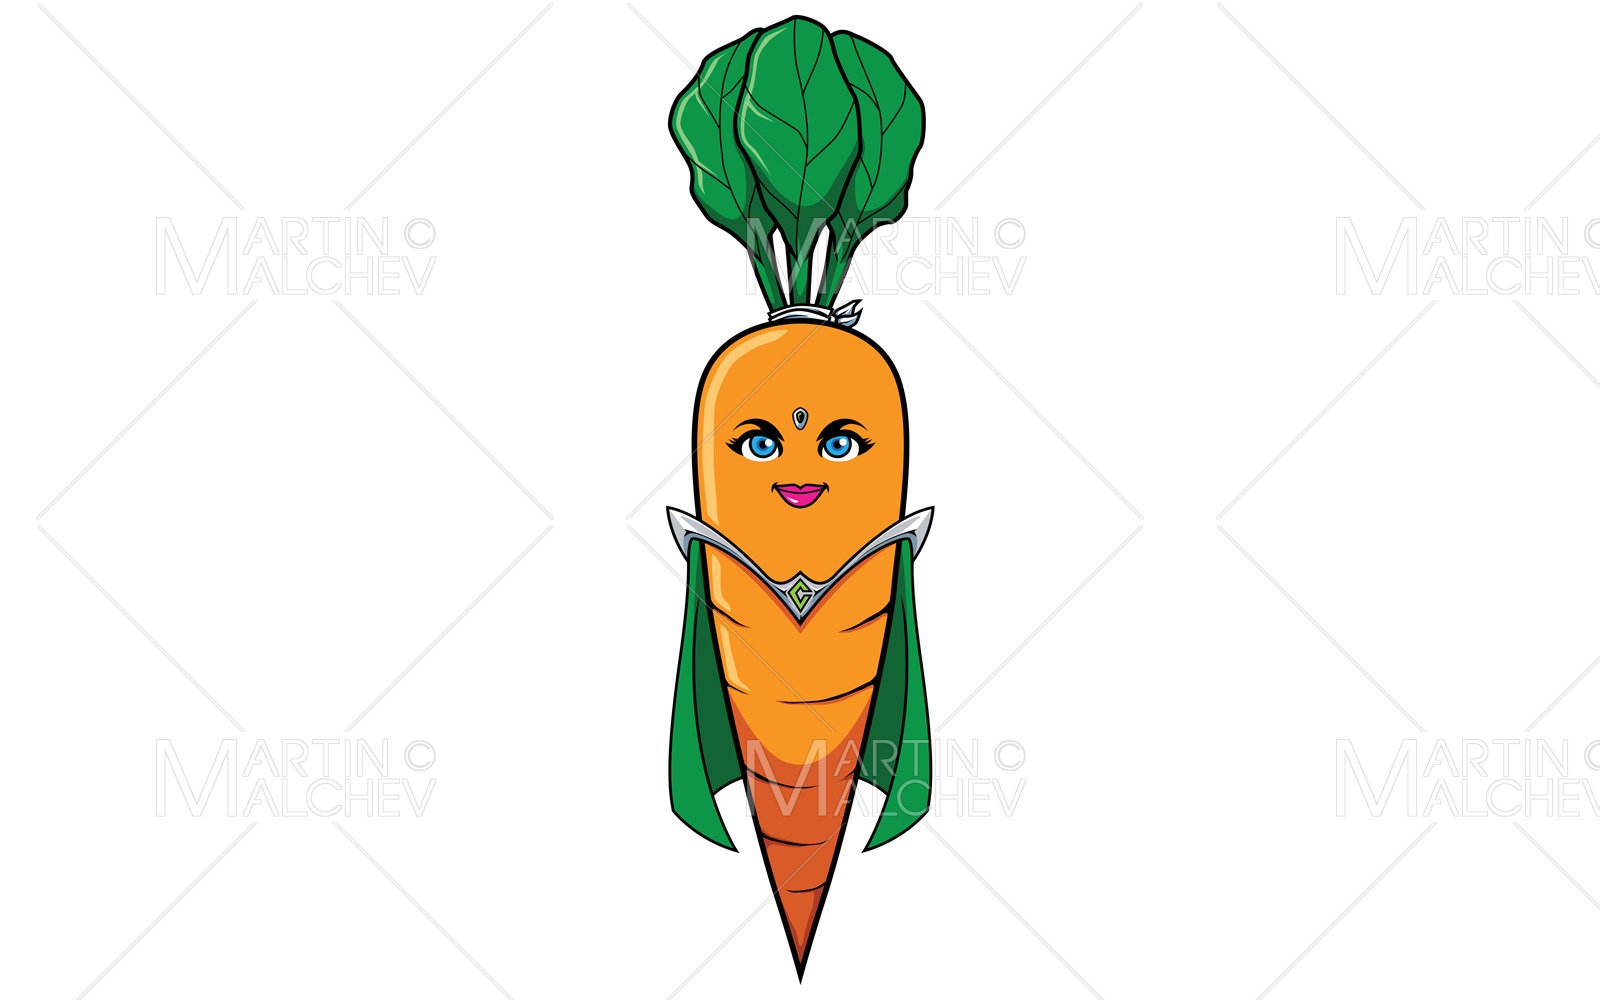 Carrot Superhero Mascot Vector Illustration